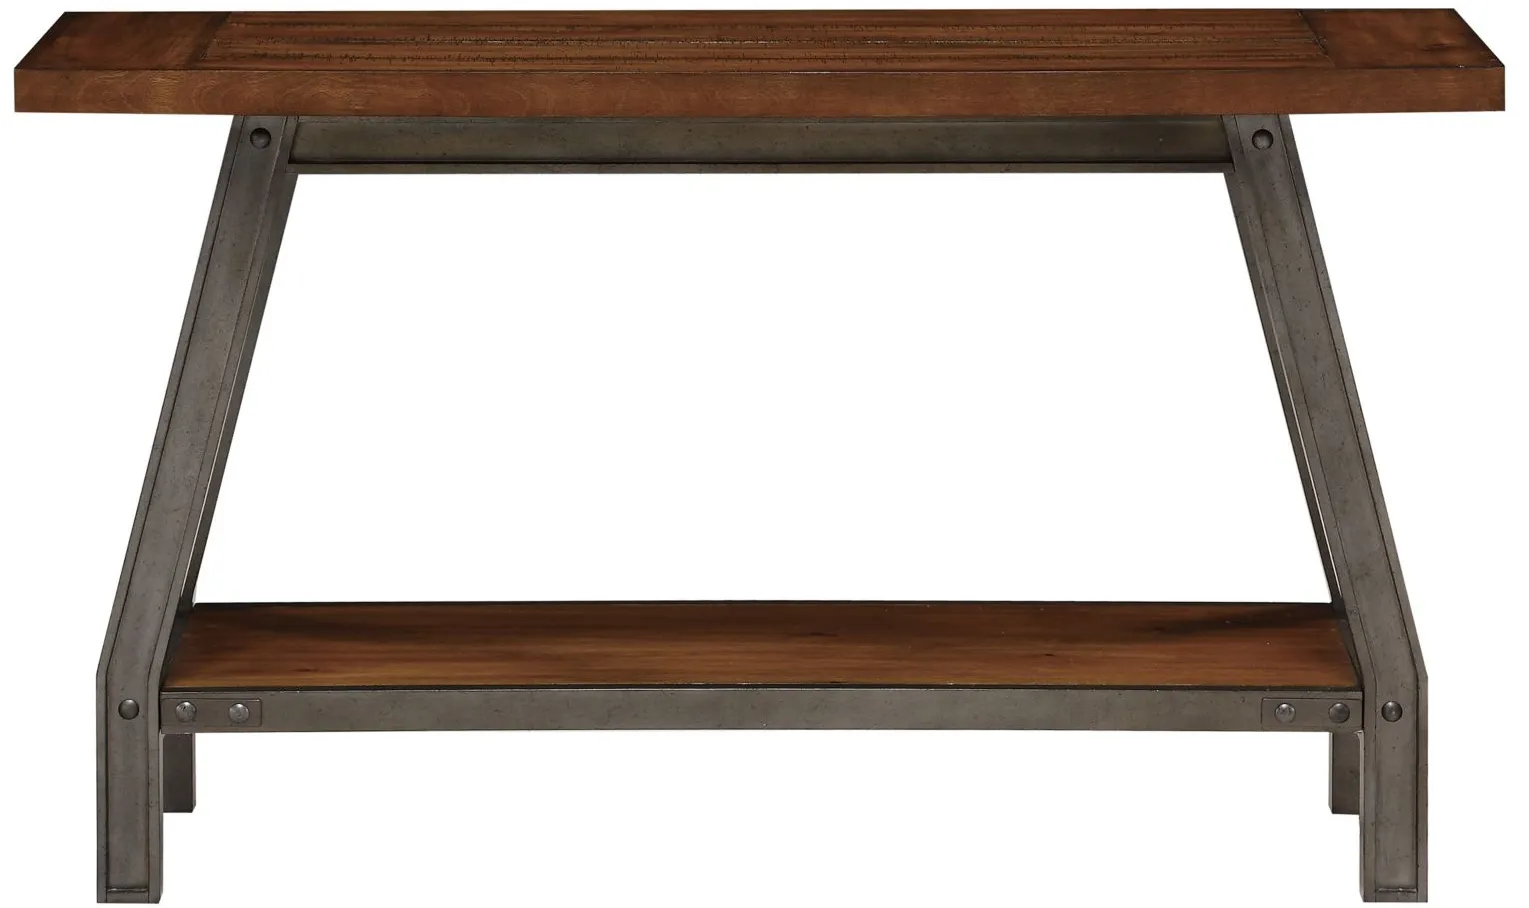 Dayton Sofa Table in 2-tone finish (Rustic brown & gunmetal) by Homelegance